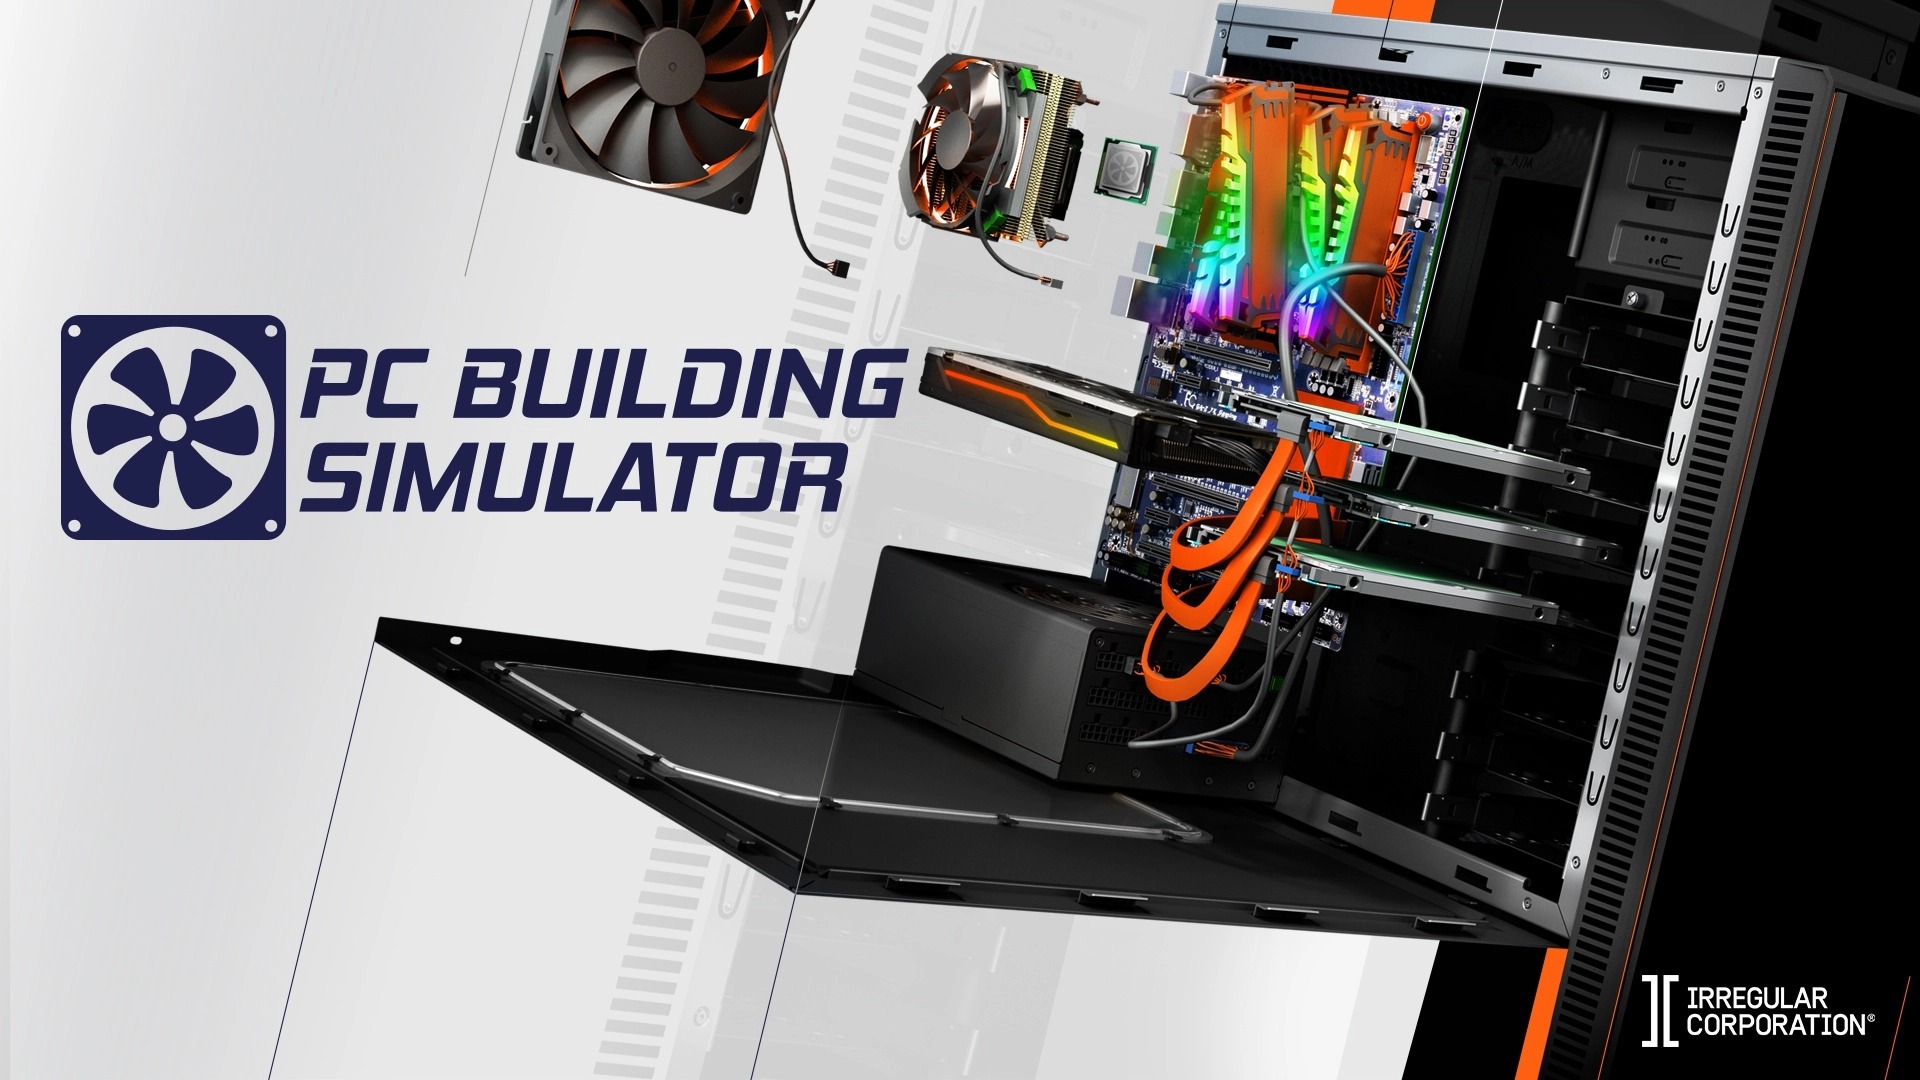 instaling PC Building Simulator 2